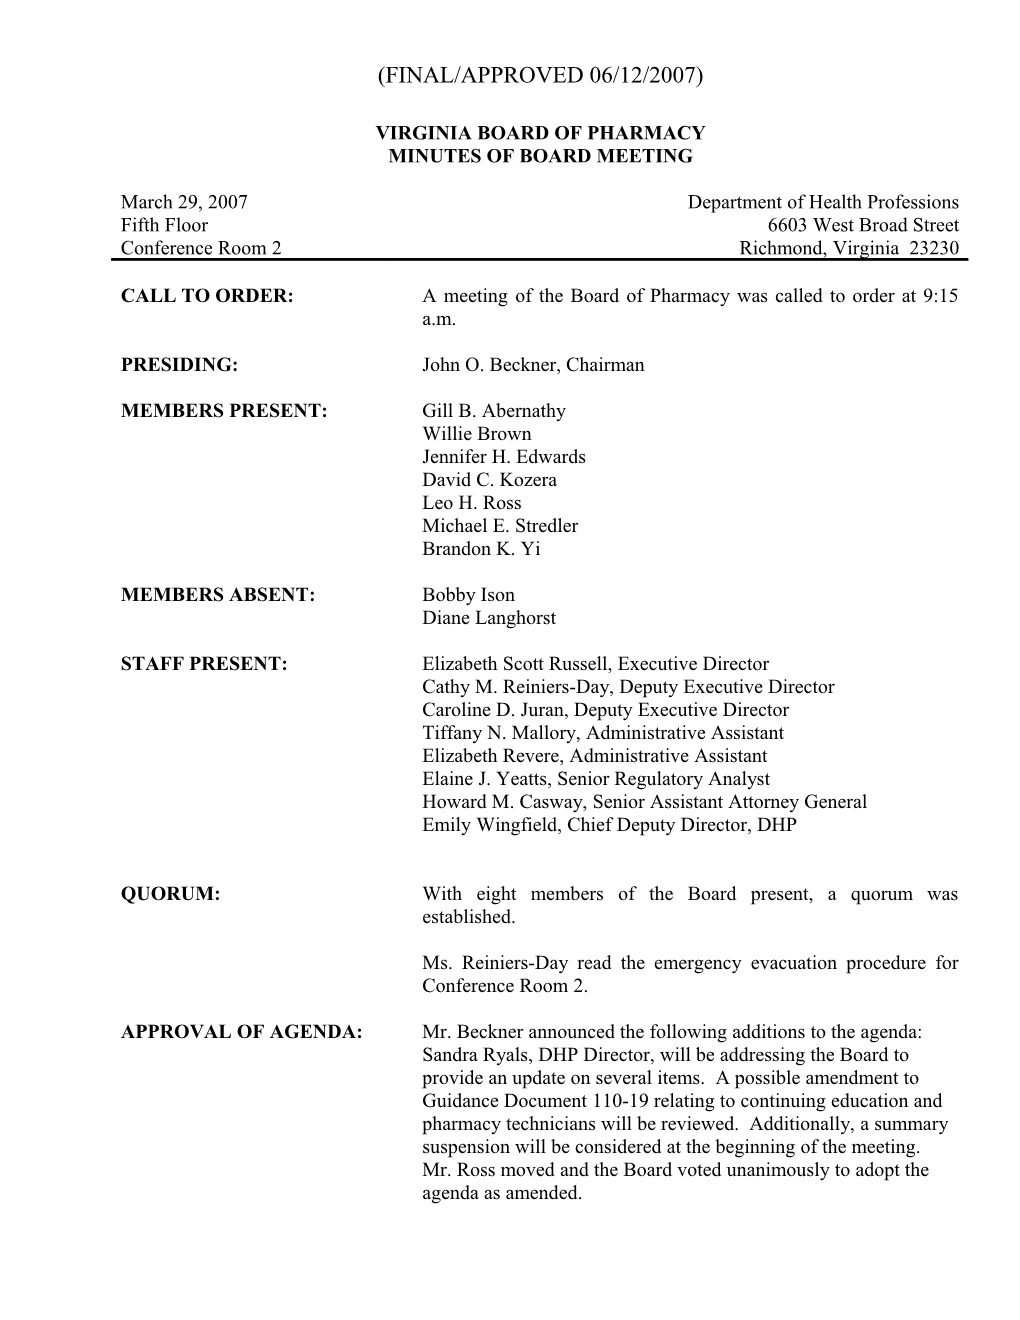 Virginia Board of Pharmacy Minutes 03-29-2007